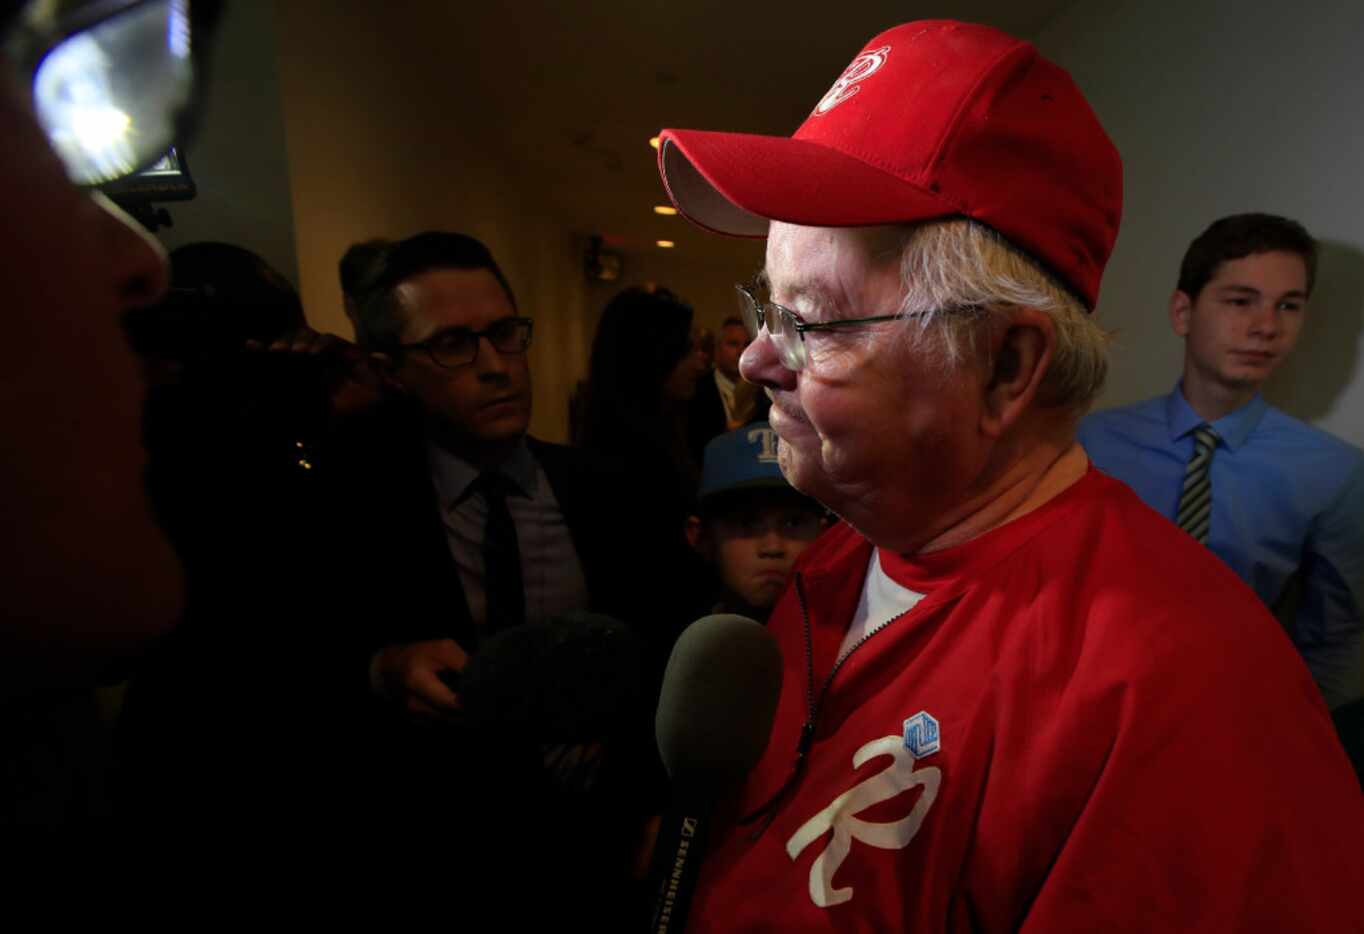 Rep. Joe Barton, R-Arlington, manager of the Republican team, wearing his baseball uniform,...